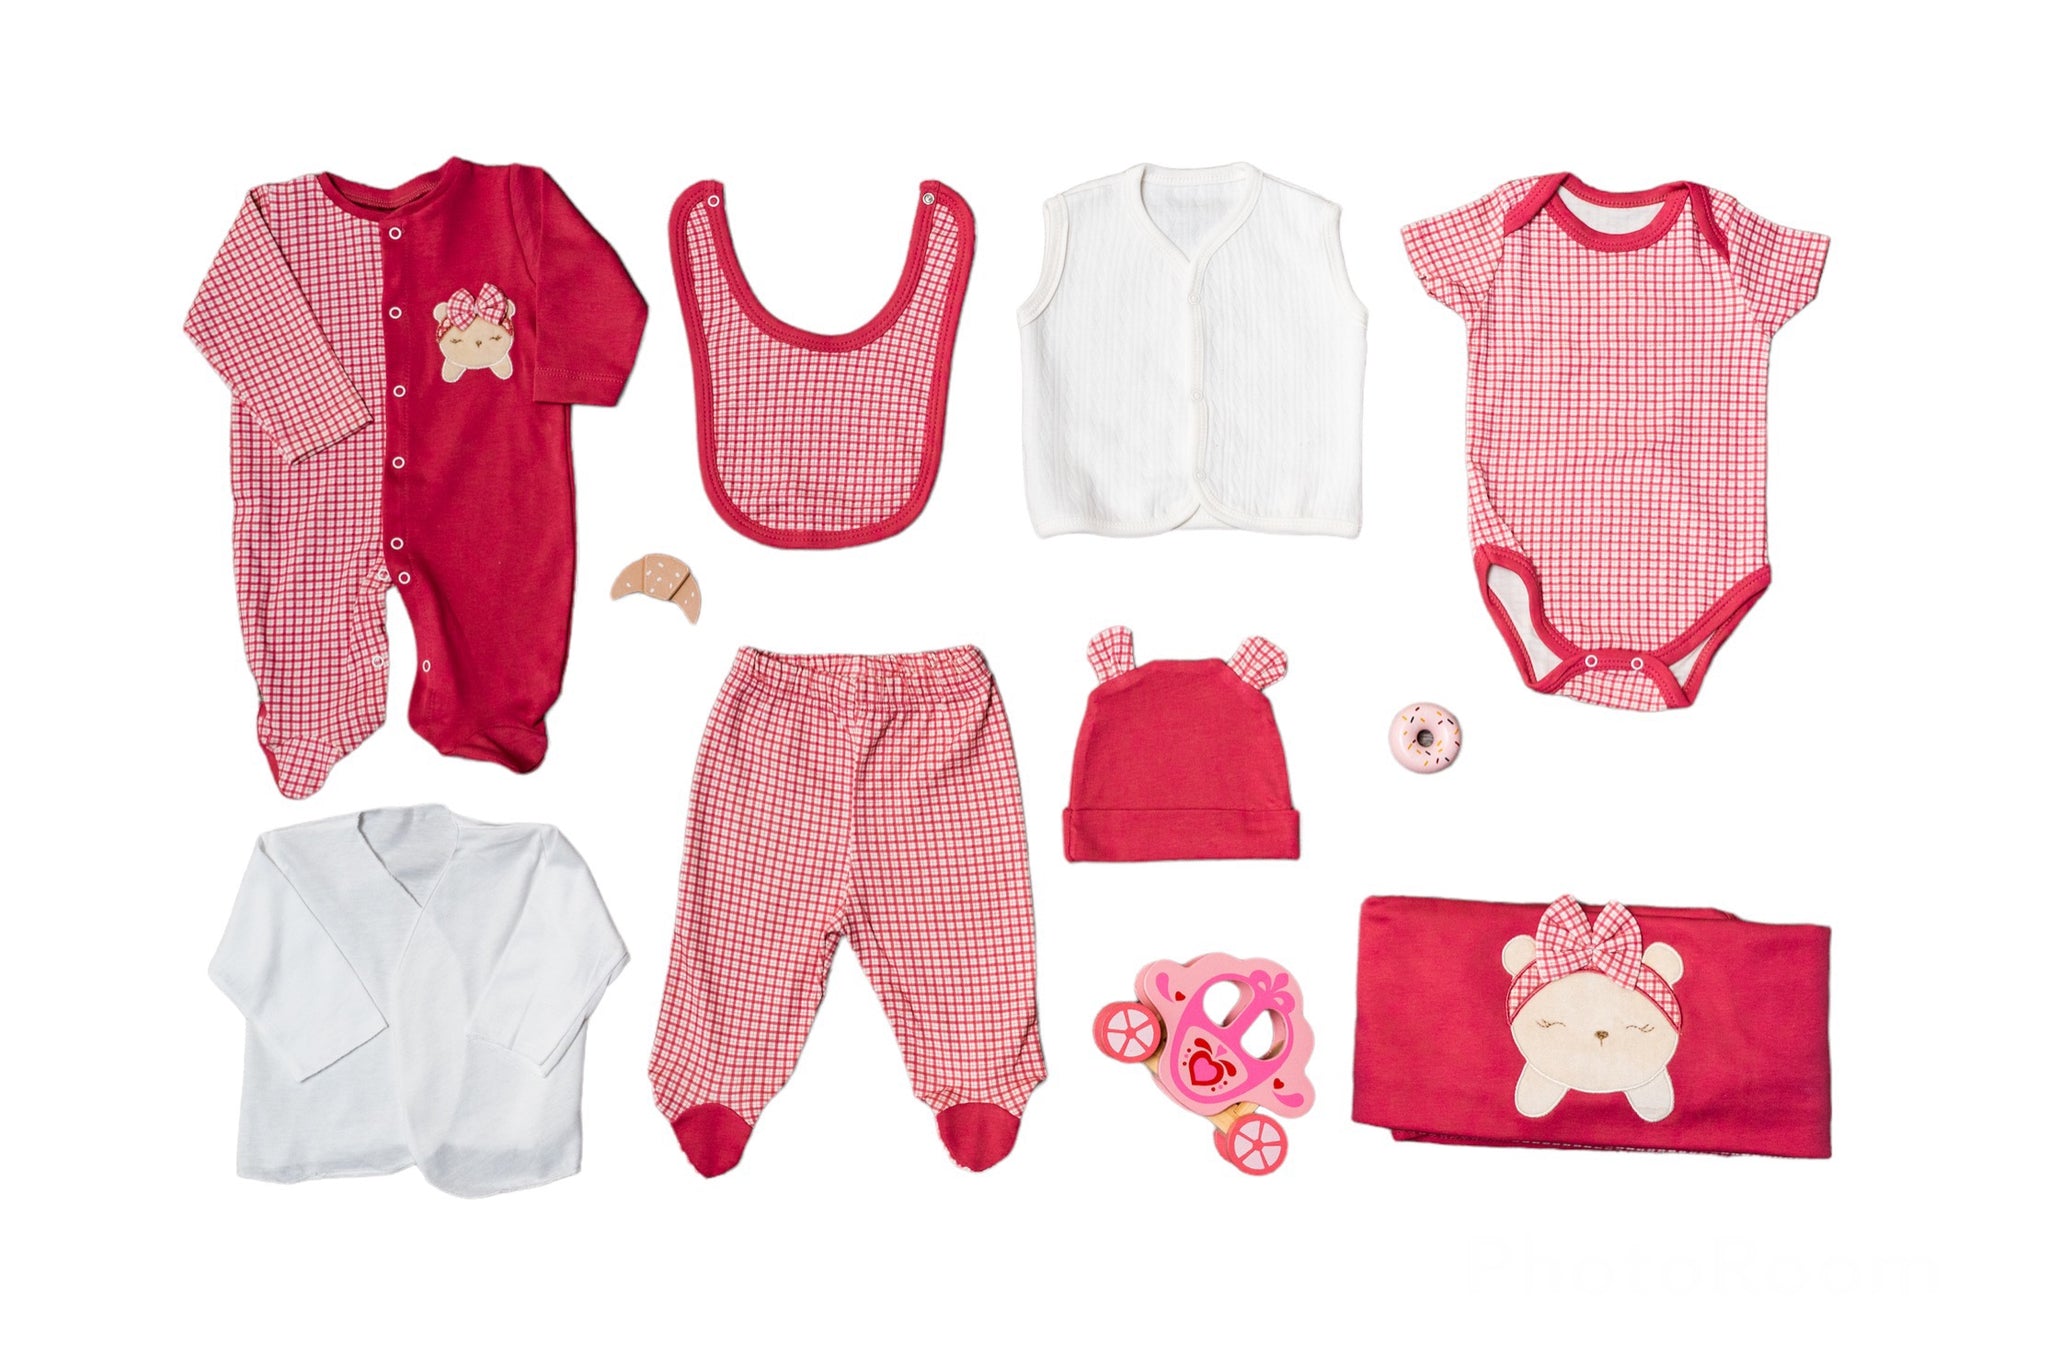 Set cadou nou-nascut bebelus 1-3 luni, 8 piese, 56cm, roz